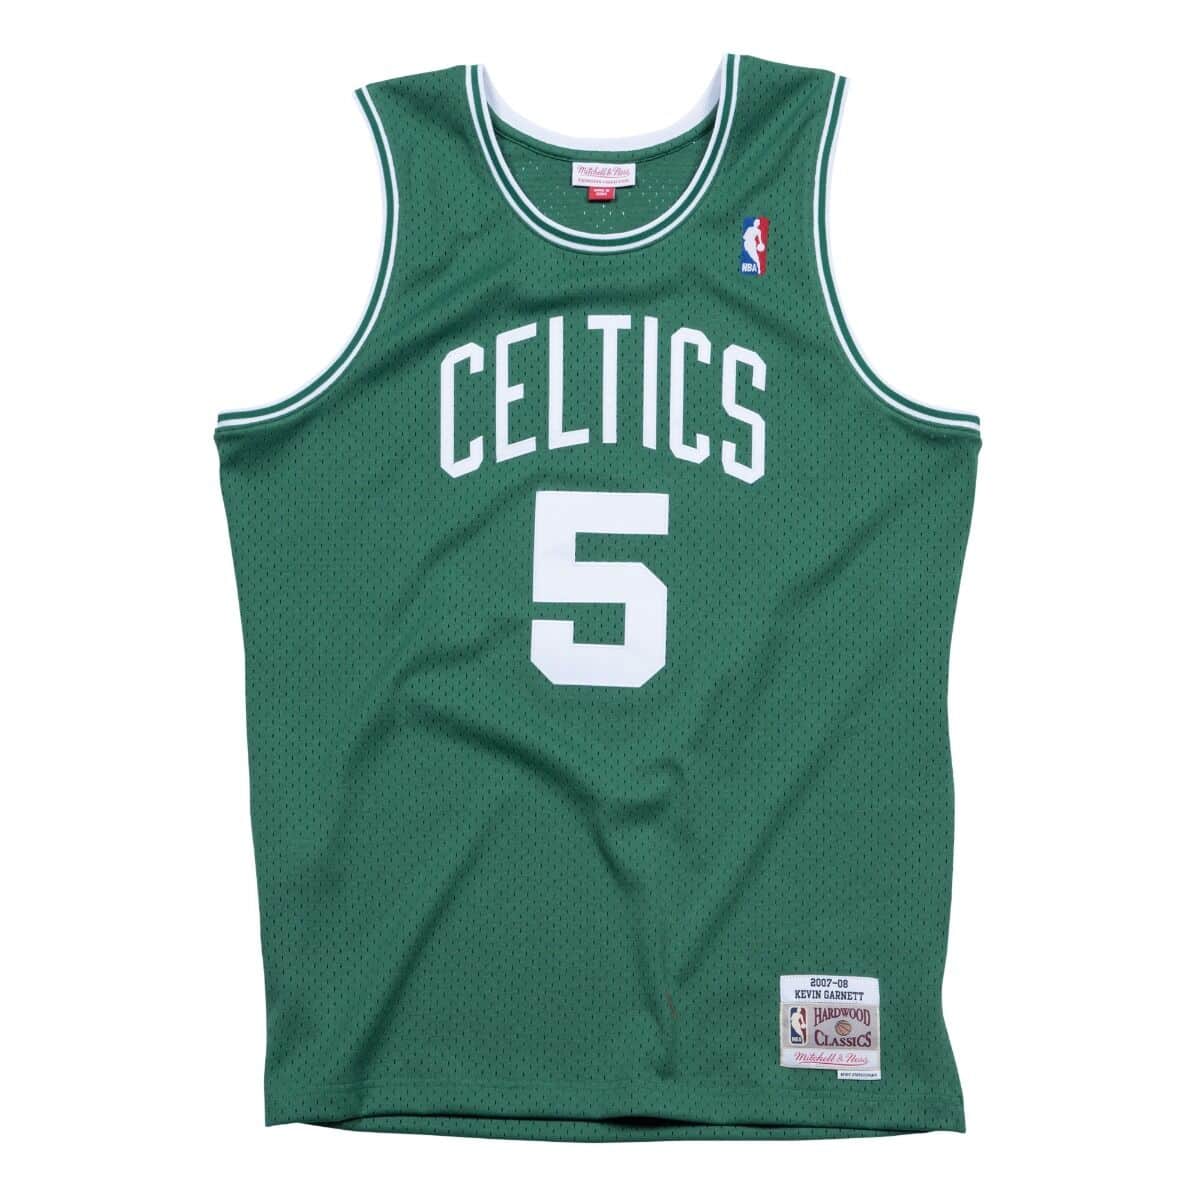 Boston Celtics NBA Kevin Garnett No. 5 white jersey Size L Exc